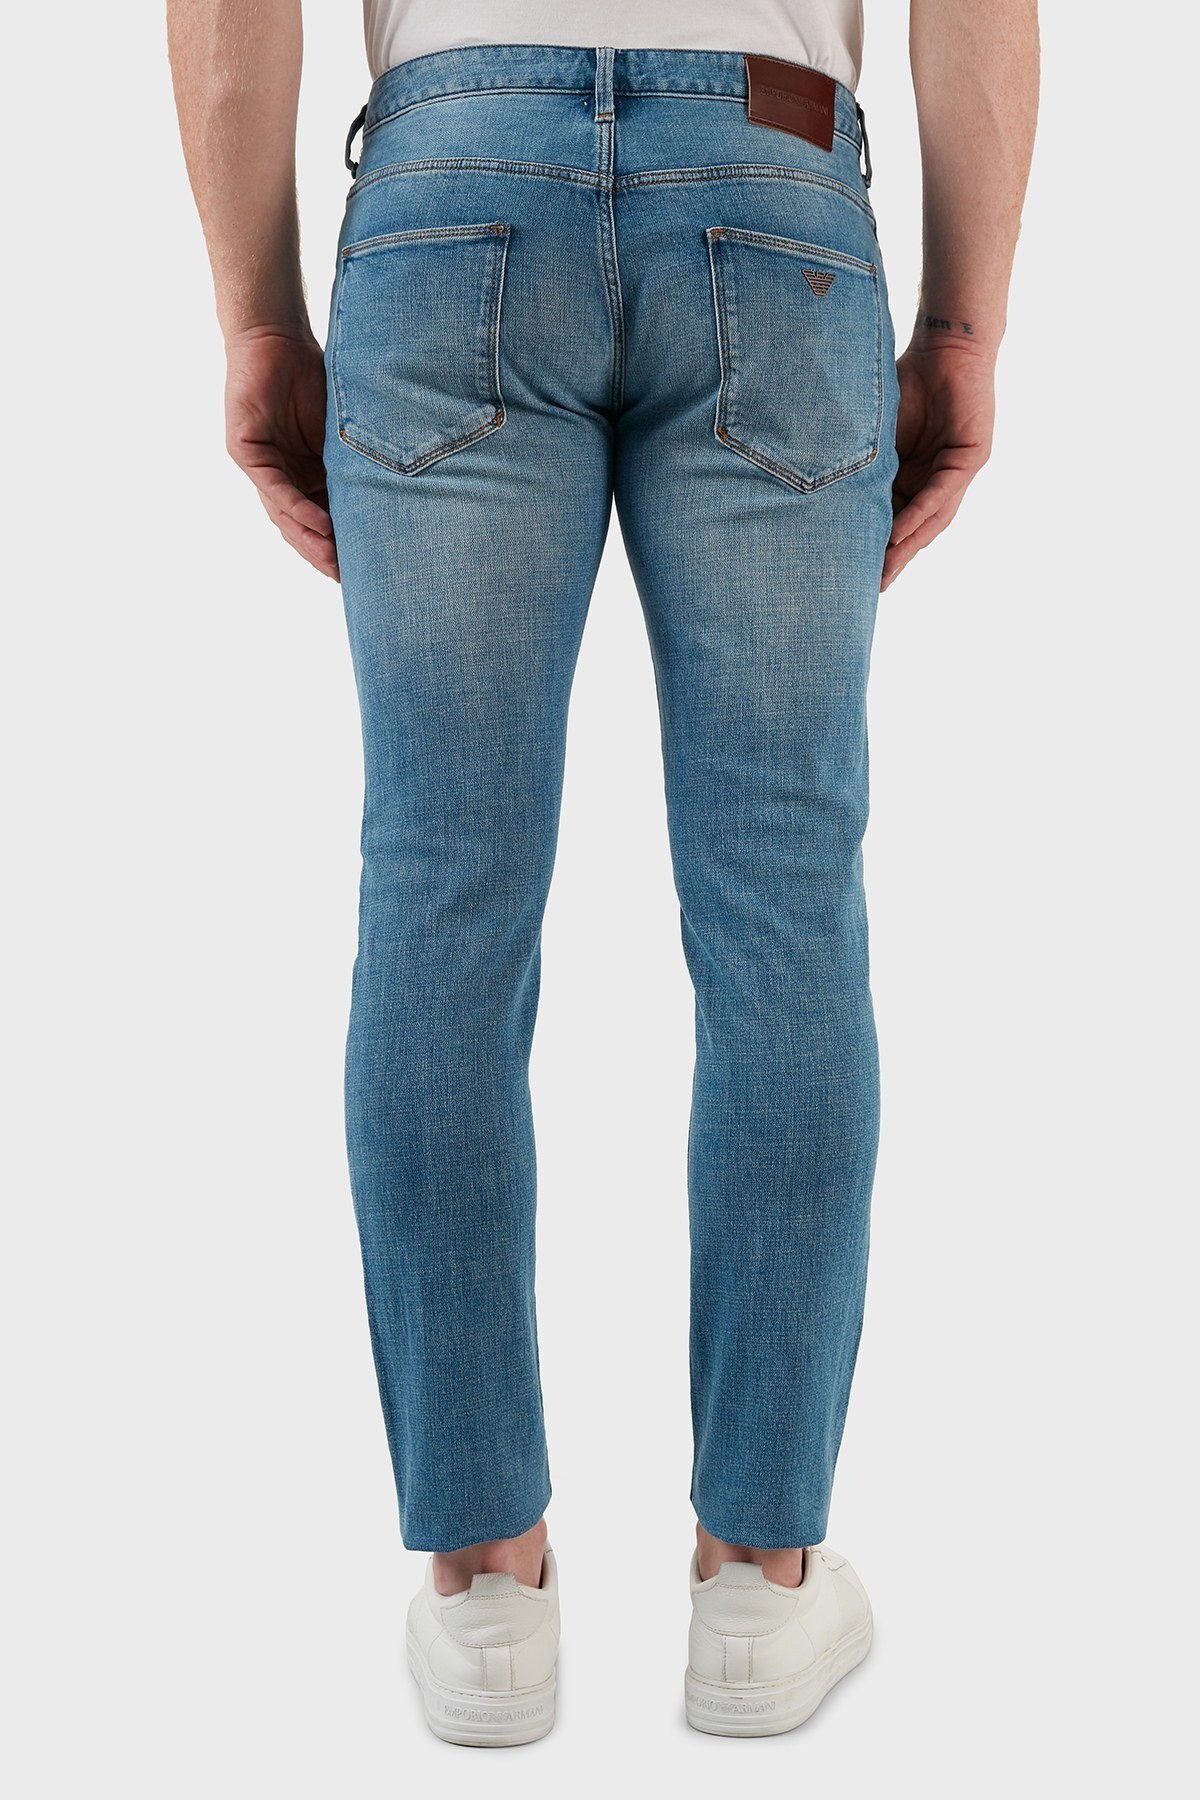 Emporio Armani Pamuklu Normal Bel Slim Fit Dar Paça Jeans Erkek Kot Pantolon 3L1J06 1DJQZ 0942 MAVİ